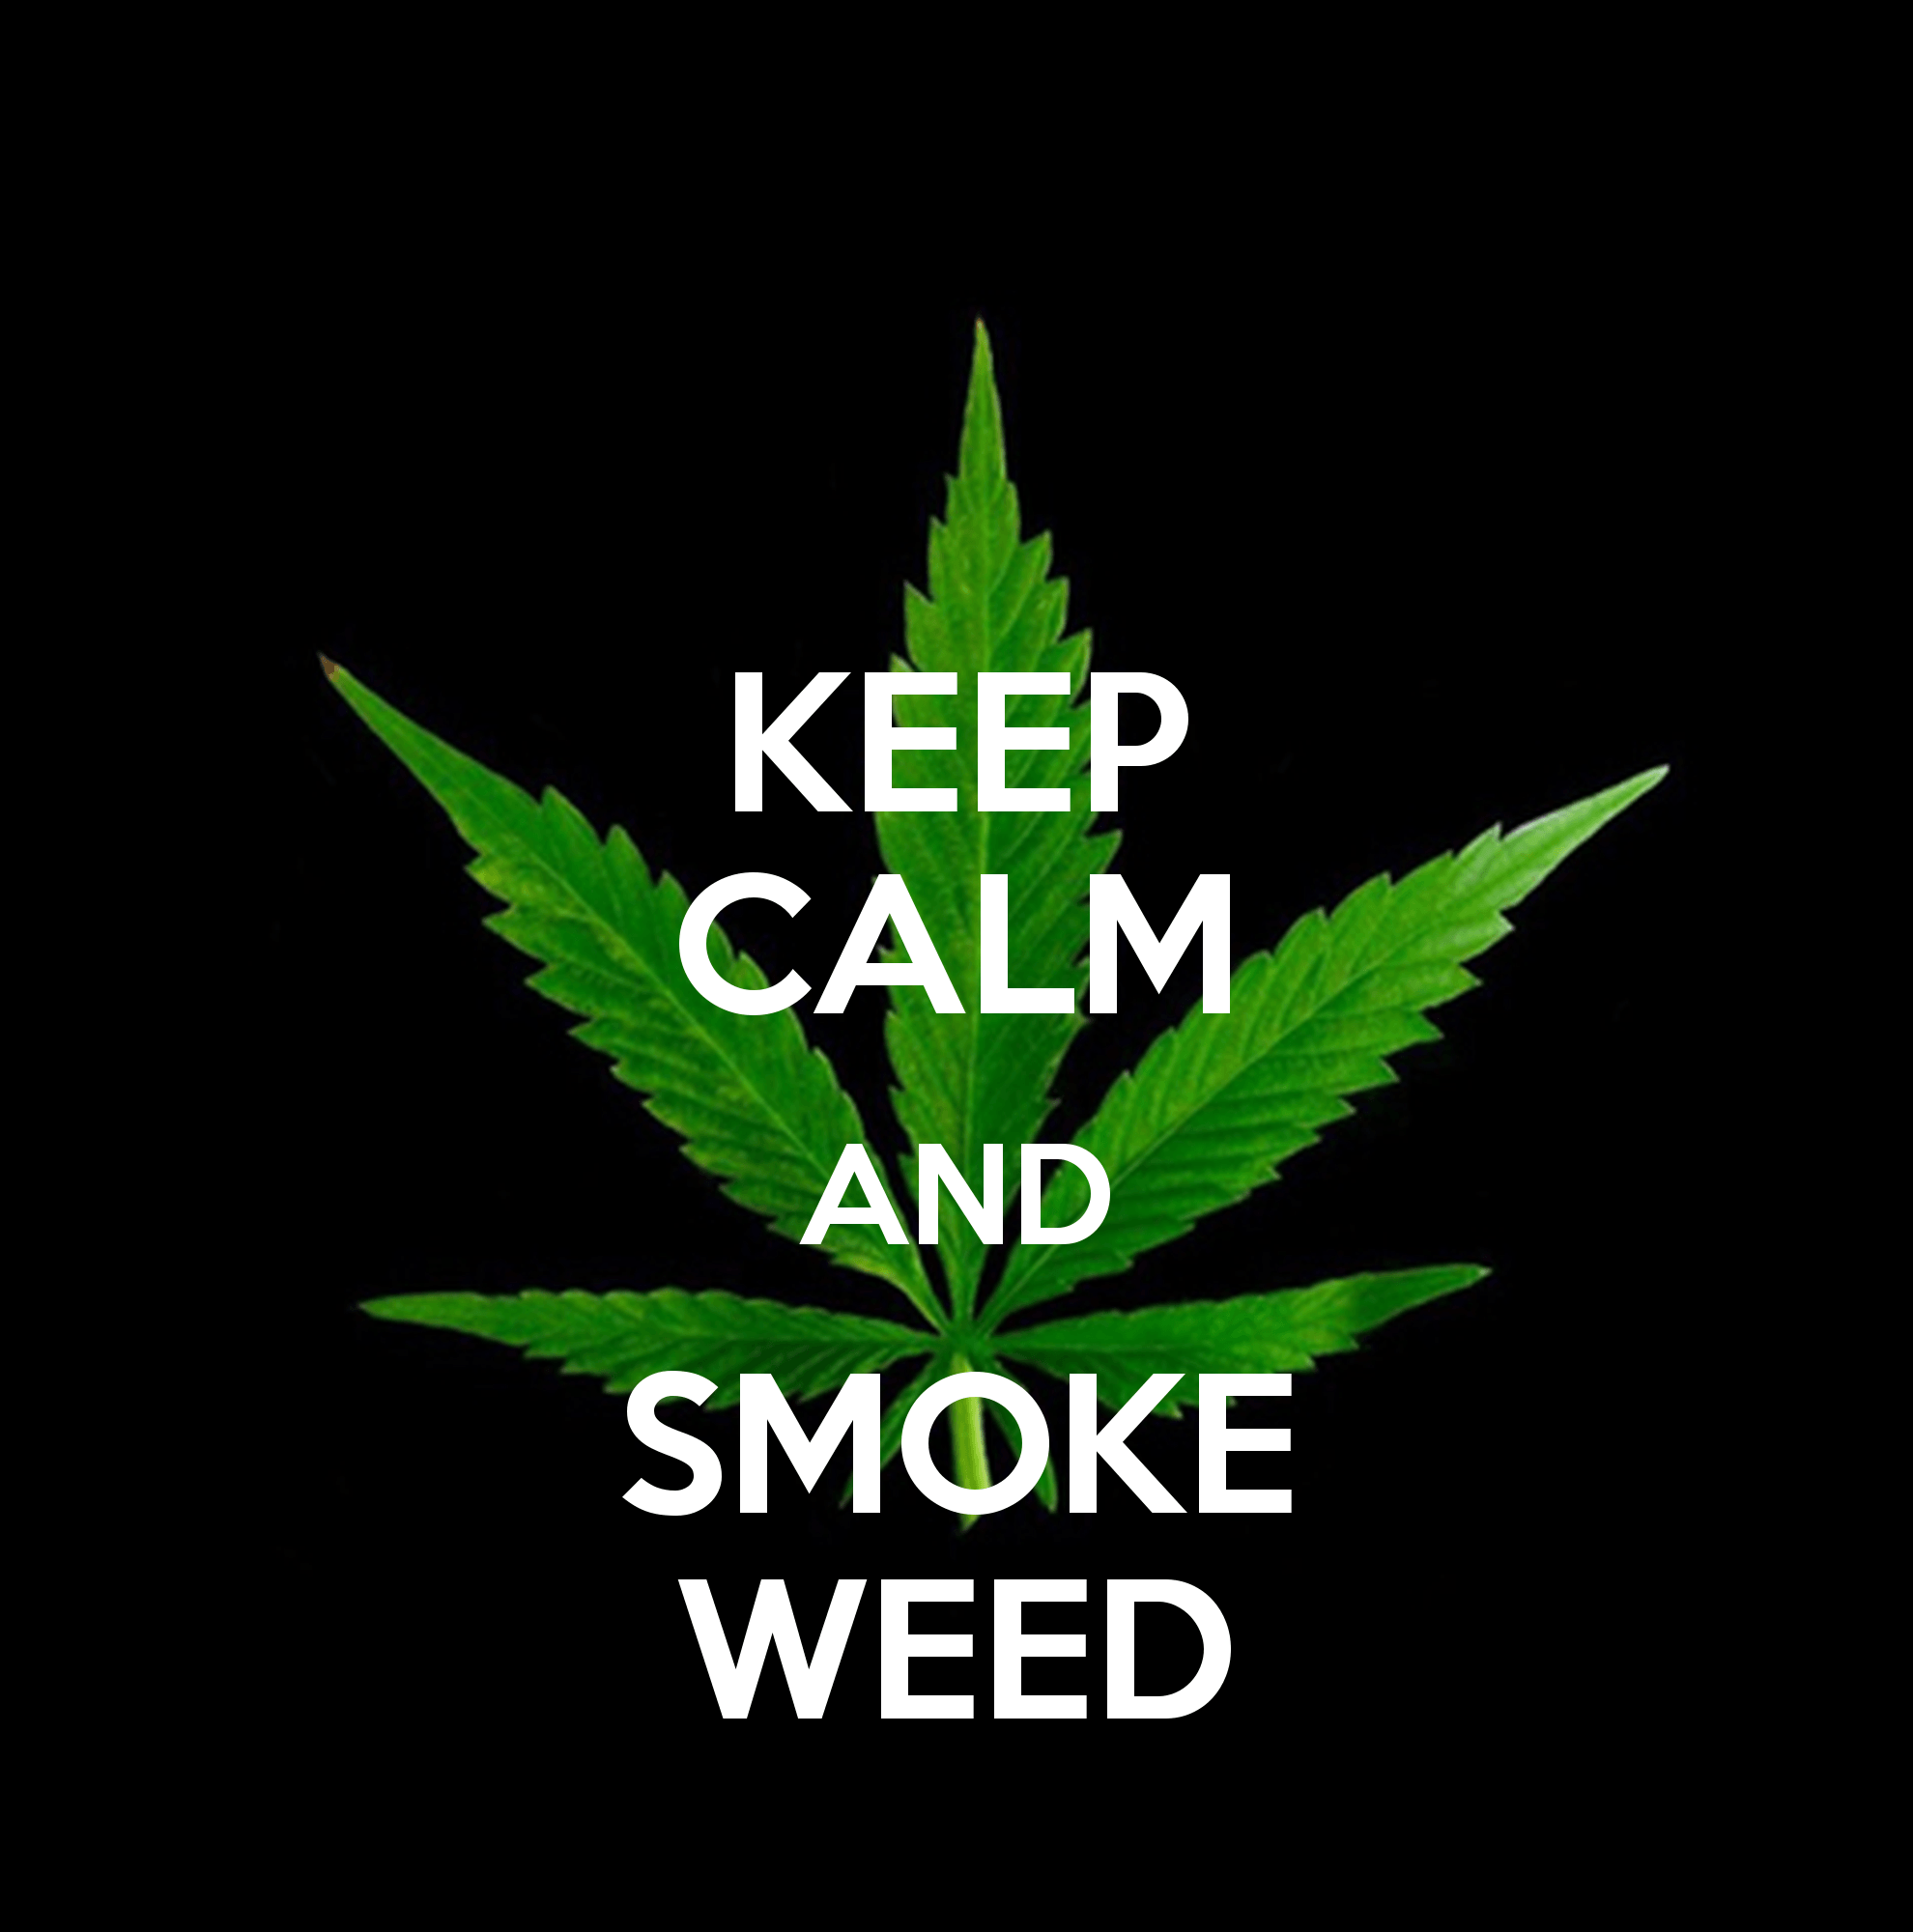 Download keep calm and smoke weed 1608png [1980x2000]. Smoking